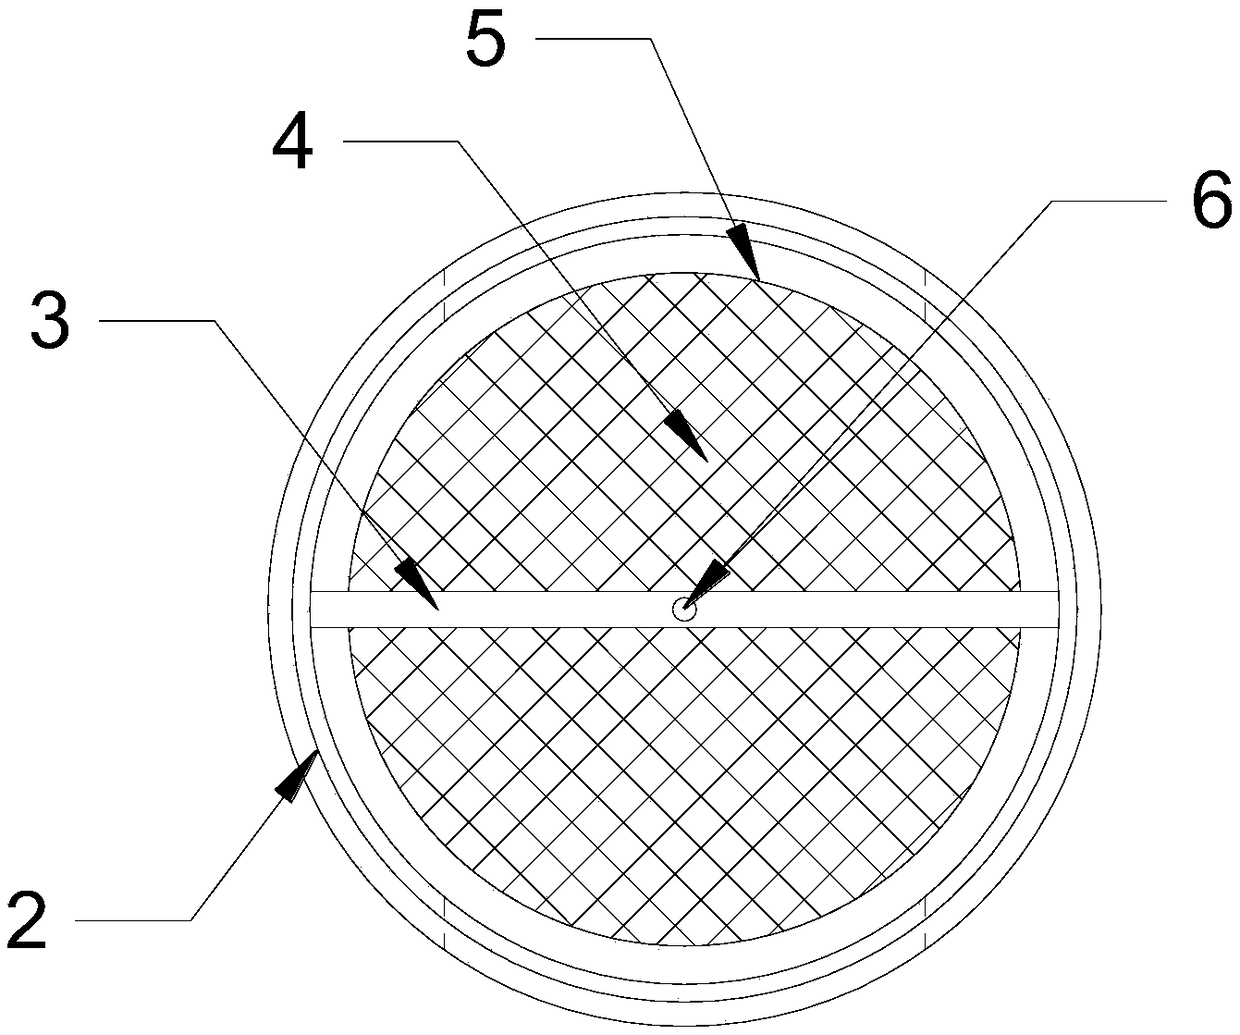 Revolving drum mechanism of water-draining and slag-blocking device